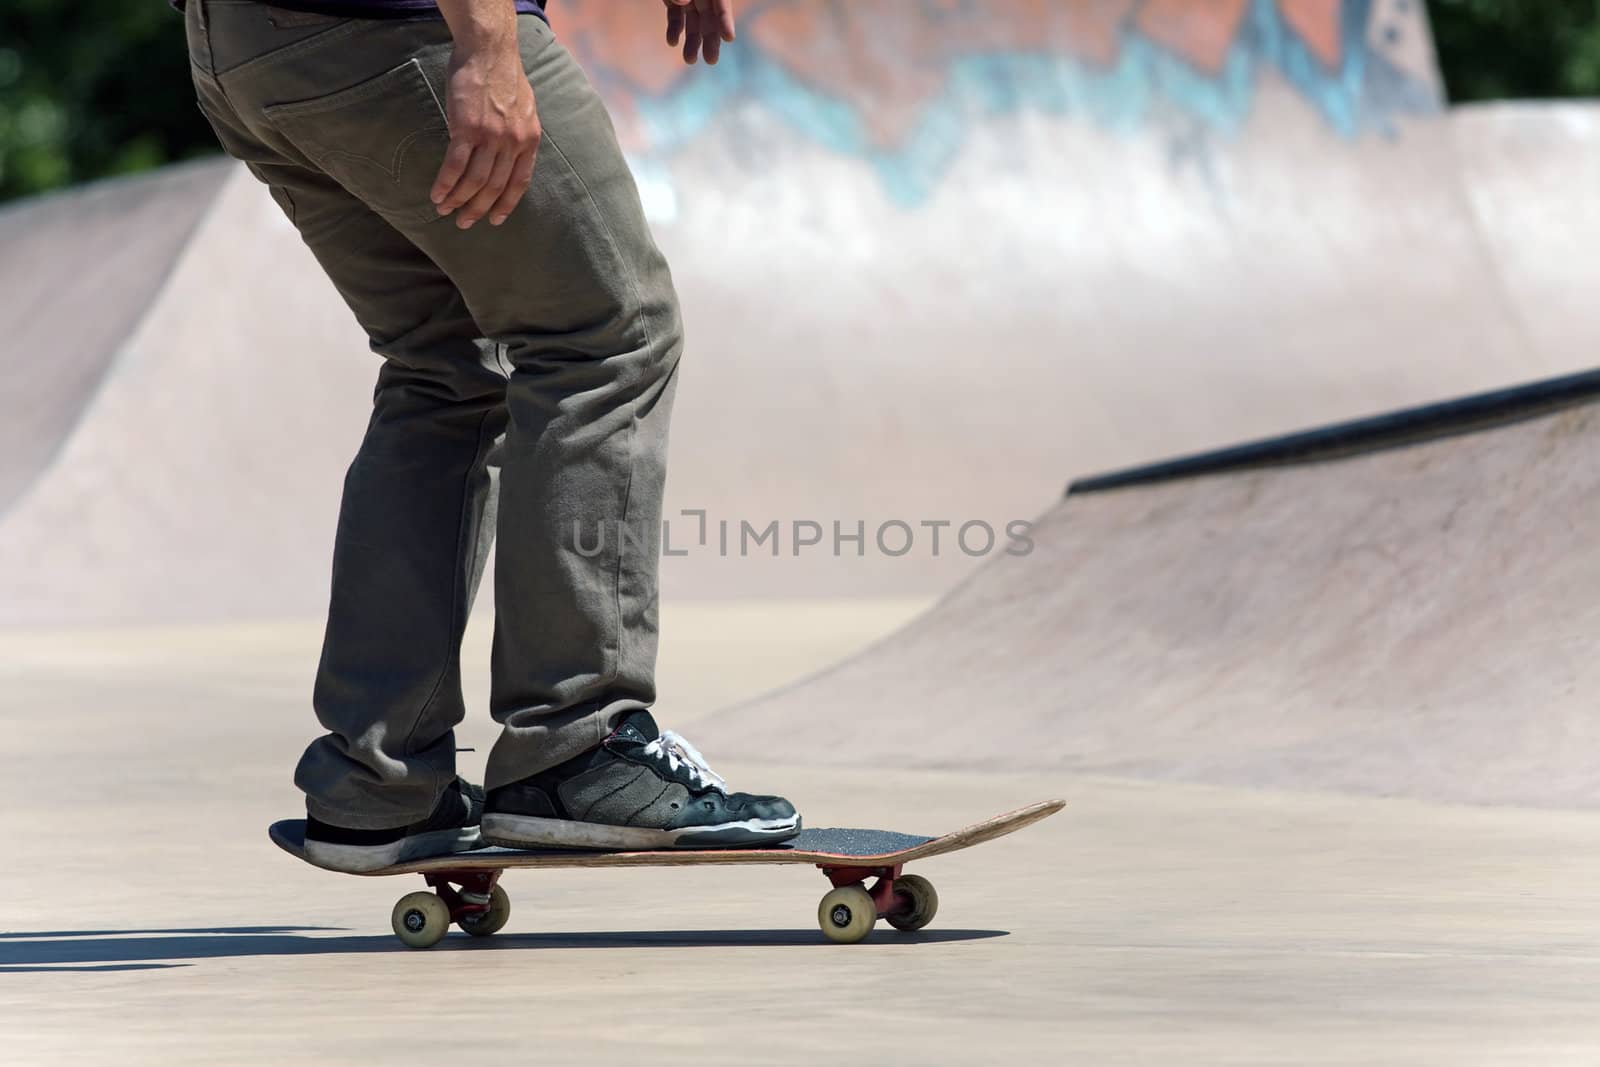 Skateboarder on the Concrete Skate Park by graficallyminded